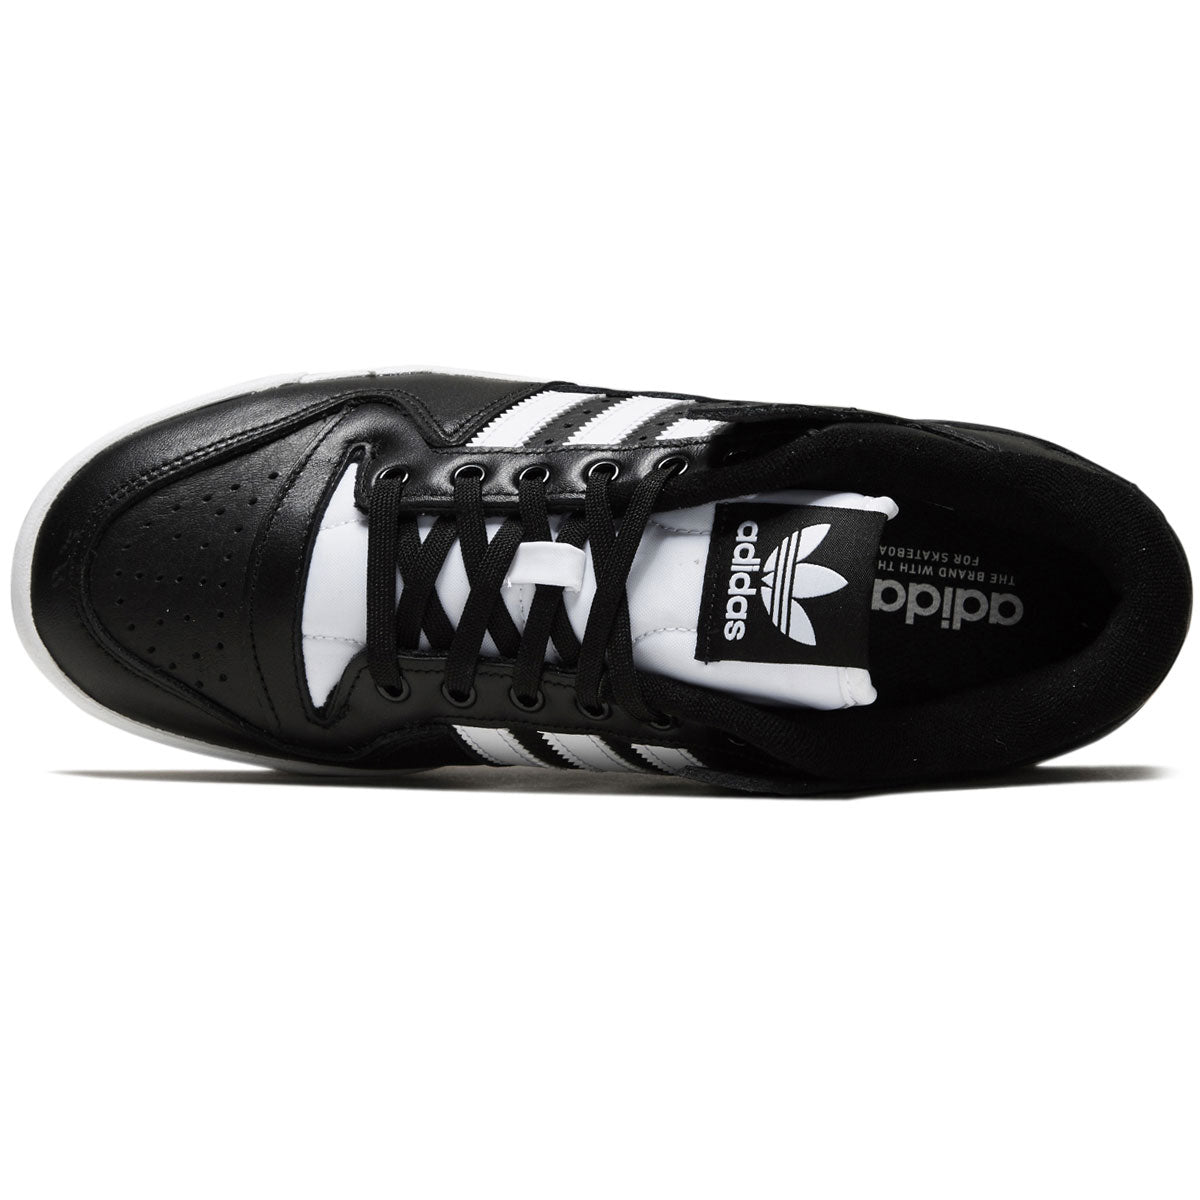 Adidas Forum 84 Low ADV Shoes - Core Black/White/White image 3